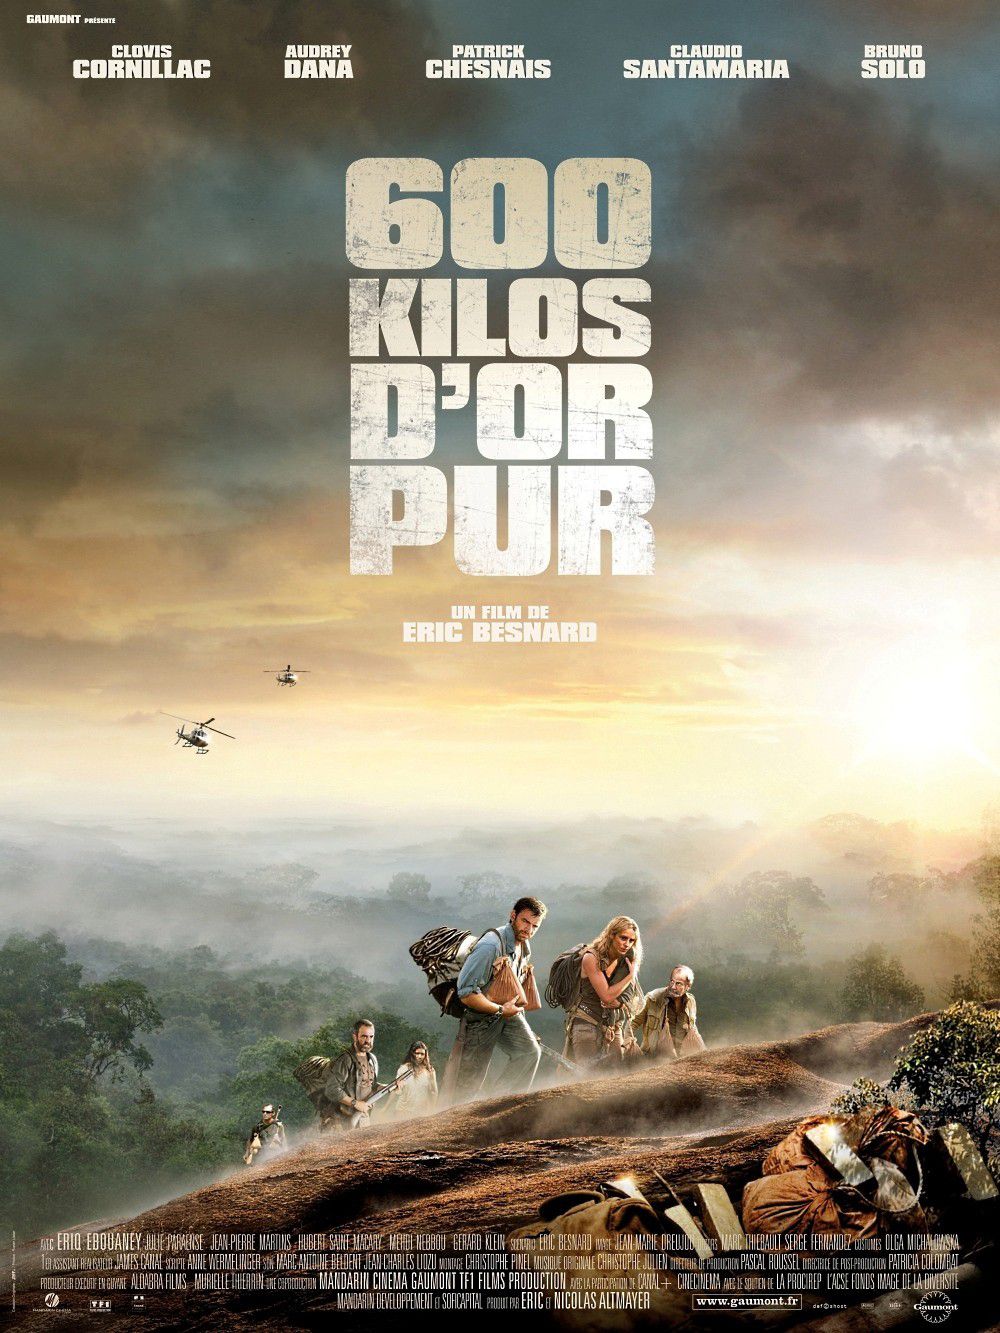 600 Kilos d'or pur - Film (2010) streaming VF gratuit complet